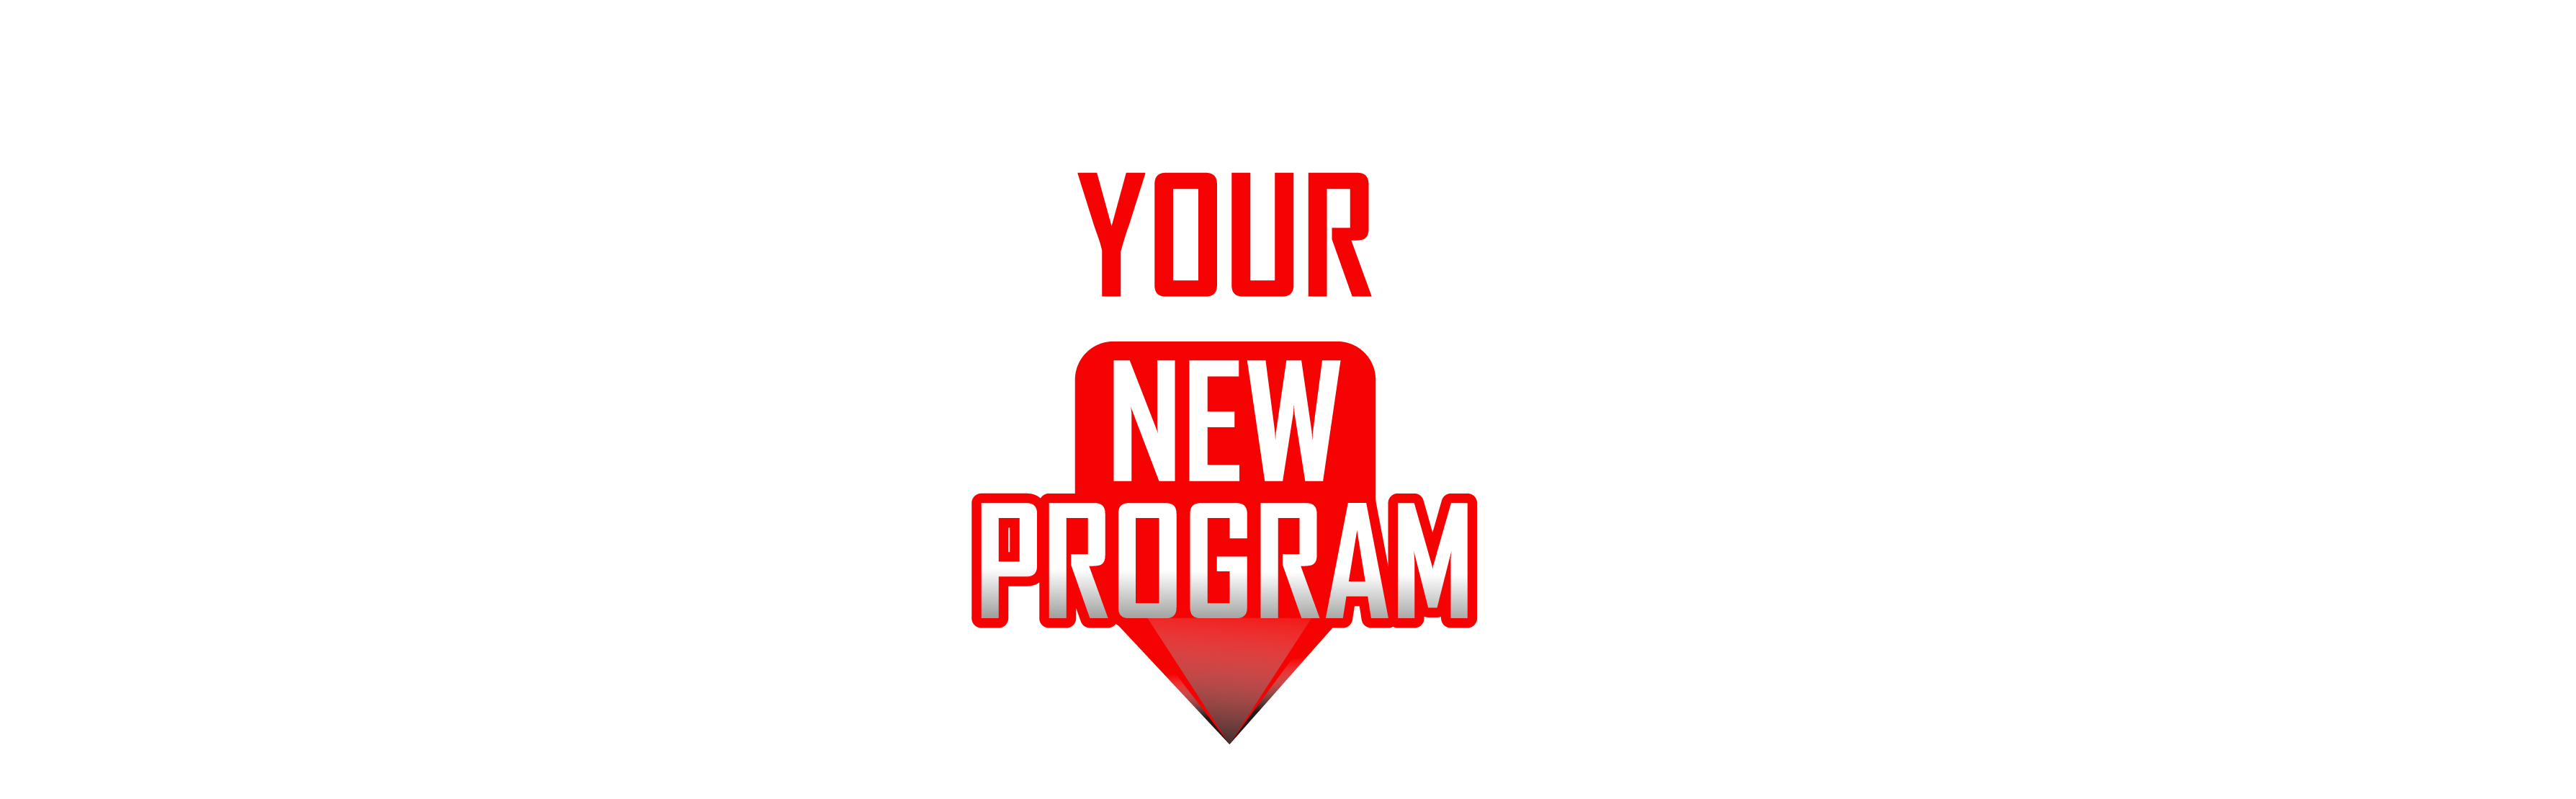 Tracking your progress - New Program